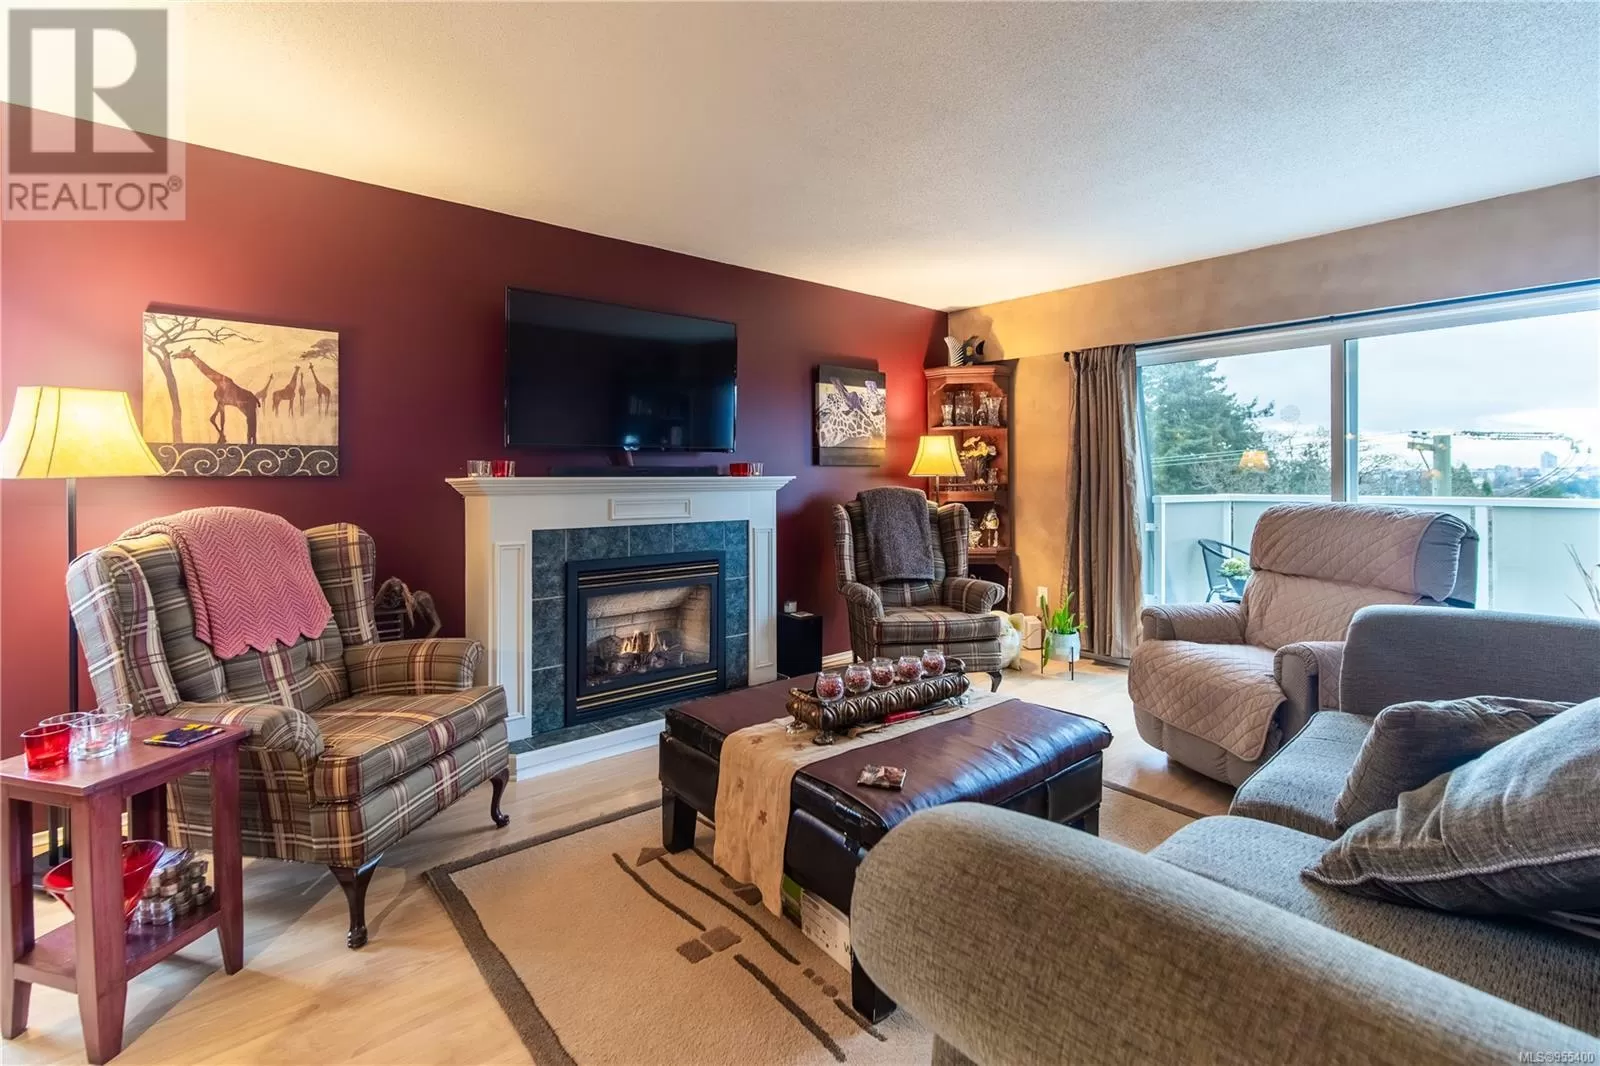 Apartment for rent: 405 710 Lampson St, Esquimalt, British Columbia V9A 6A6